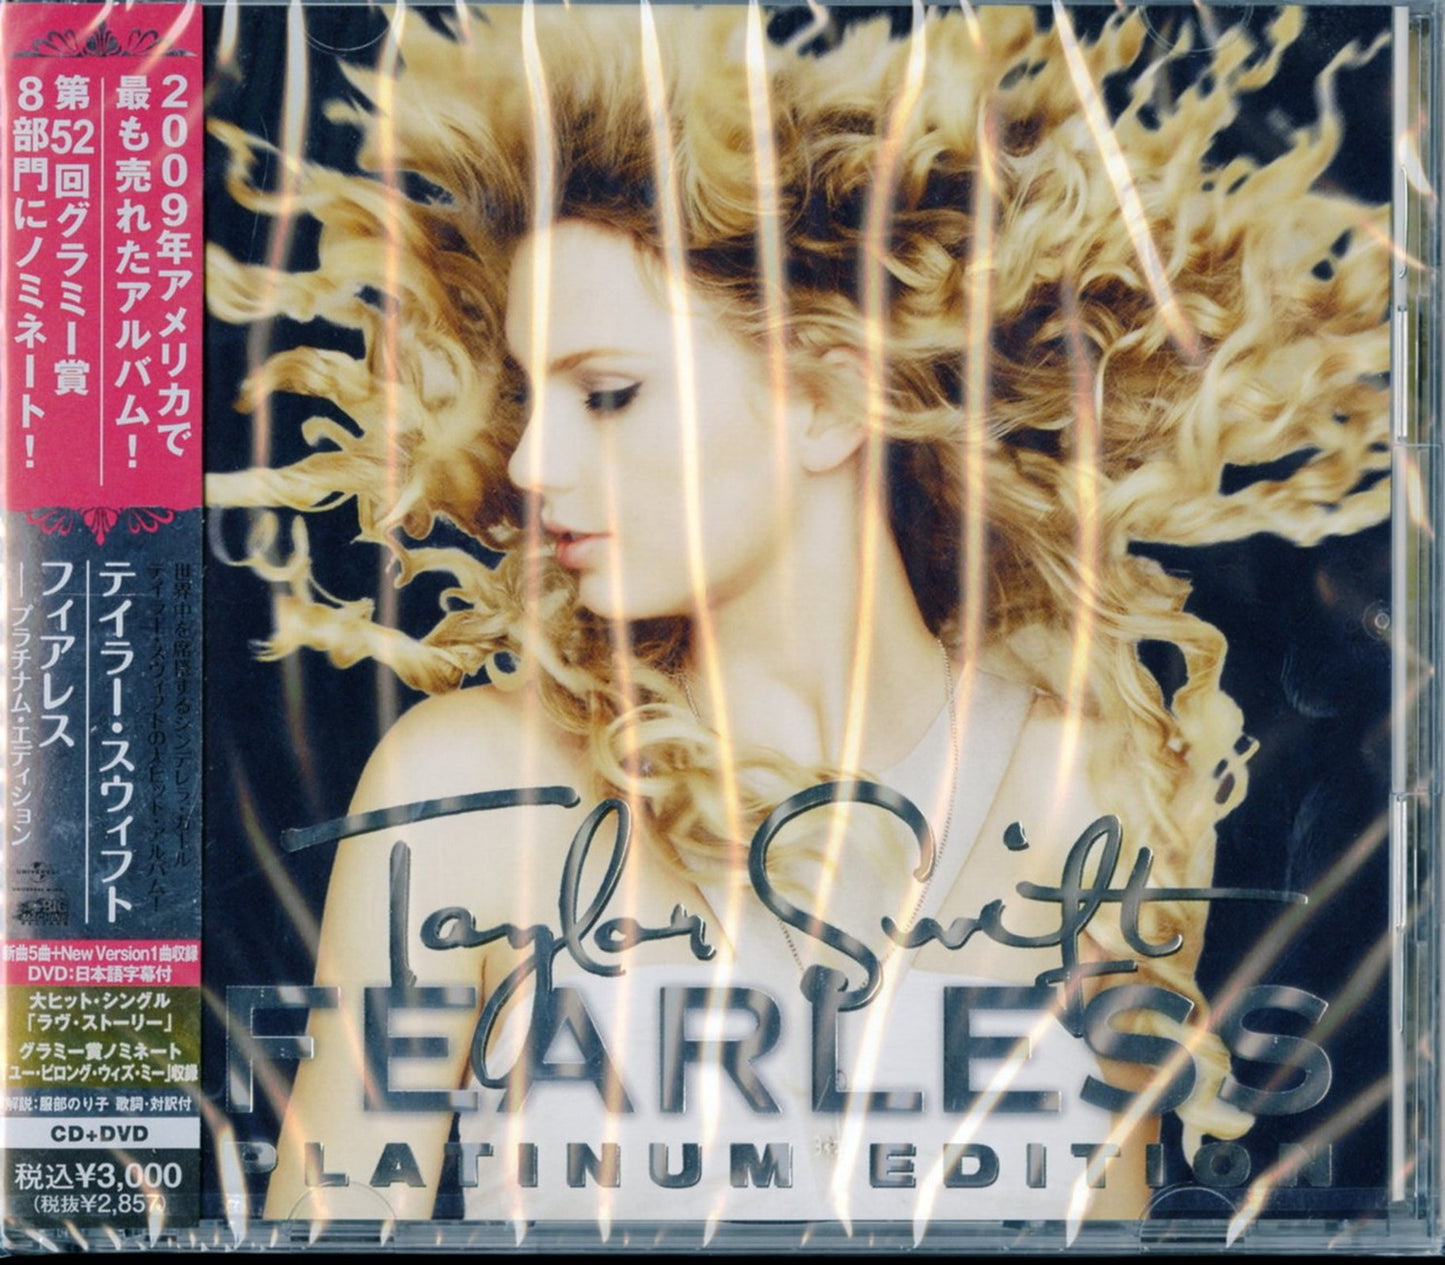 Taylor Swift - Fearless Platinum Edition - Japan  CD+DVD